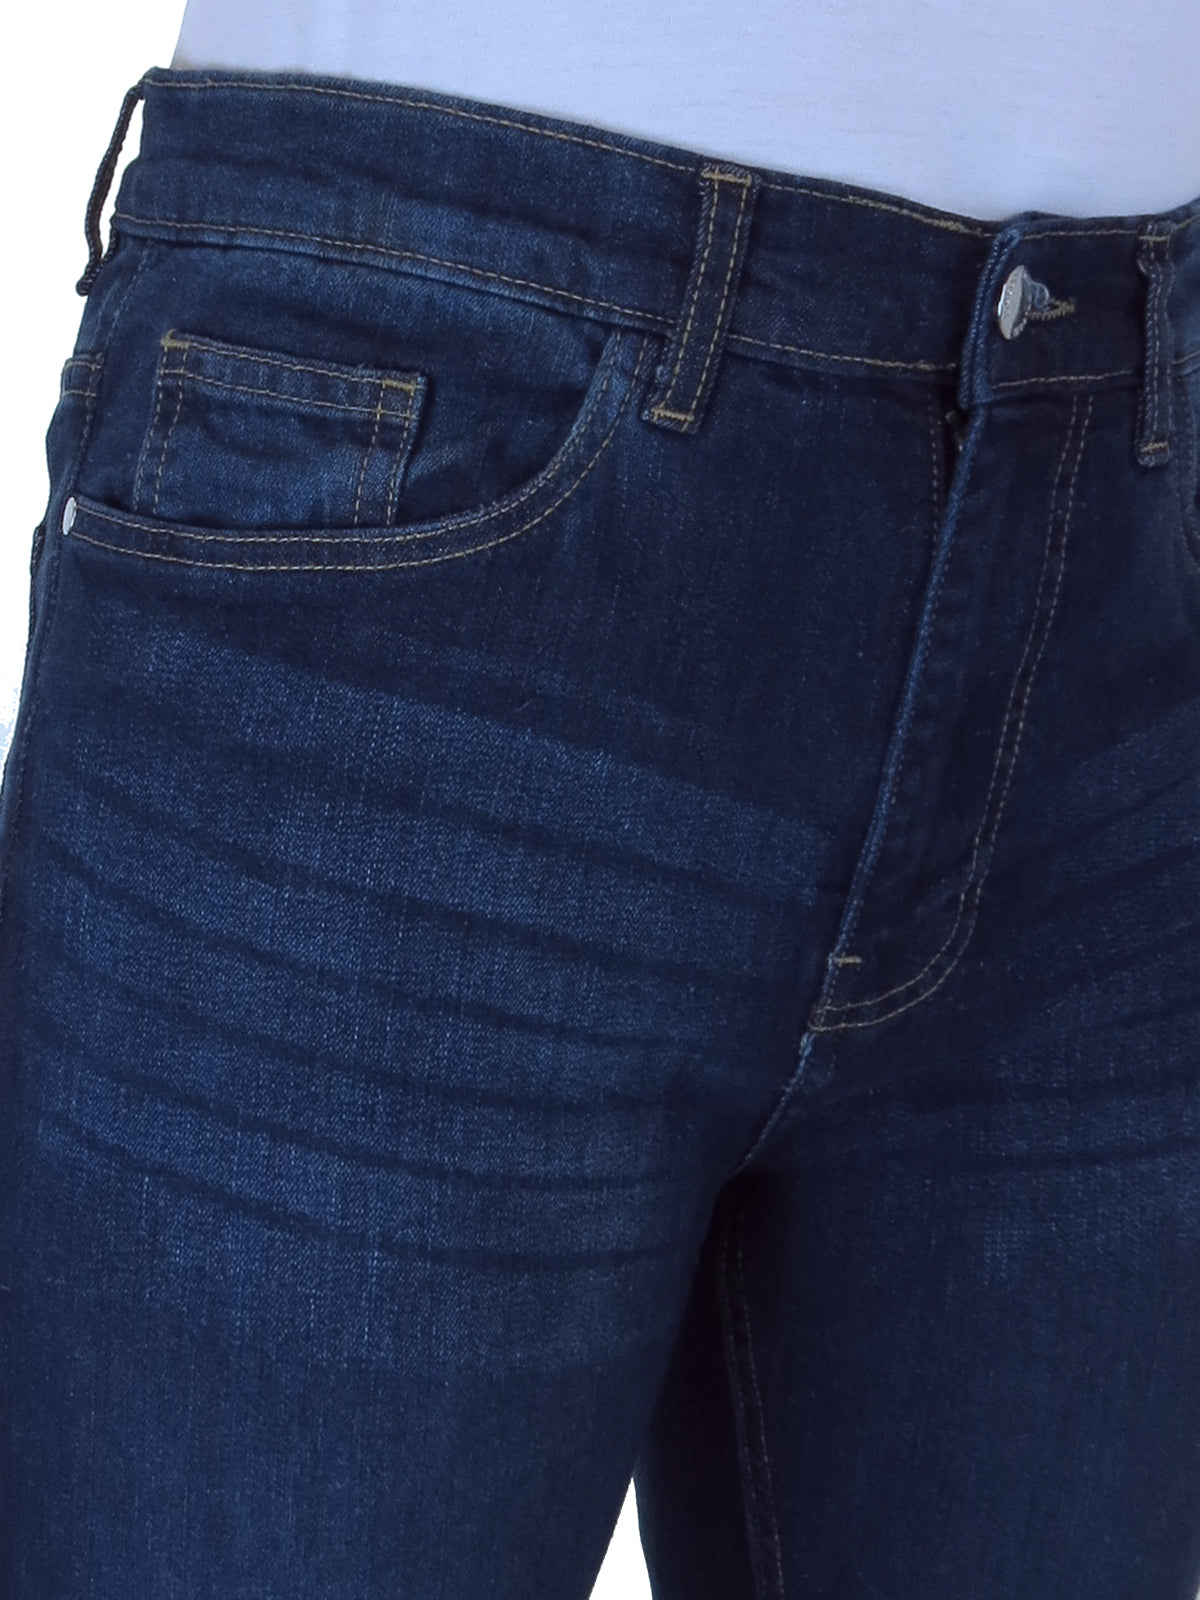 Women's Flared Stretch Denim High Waist Jeans With Frayed Hem Dark Faded Blue